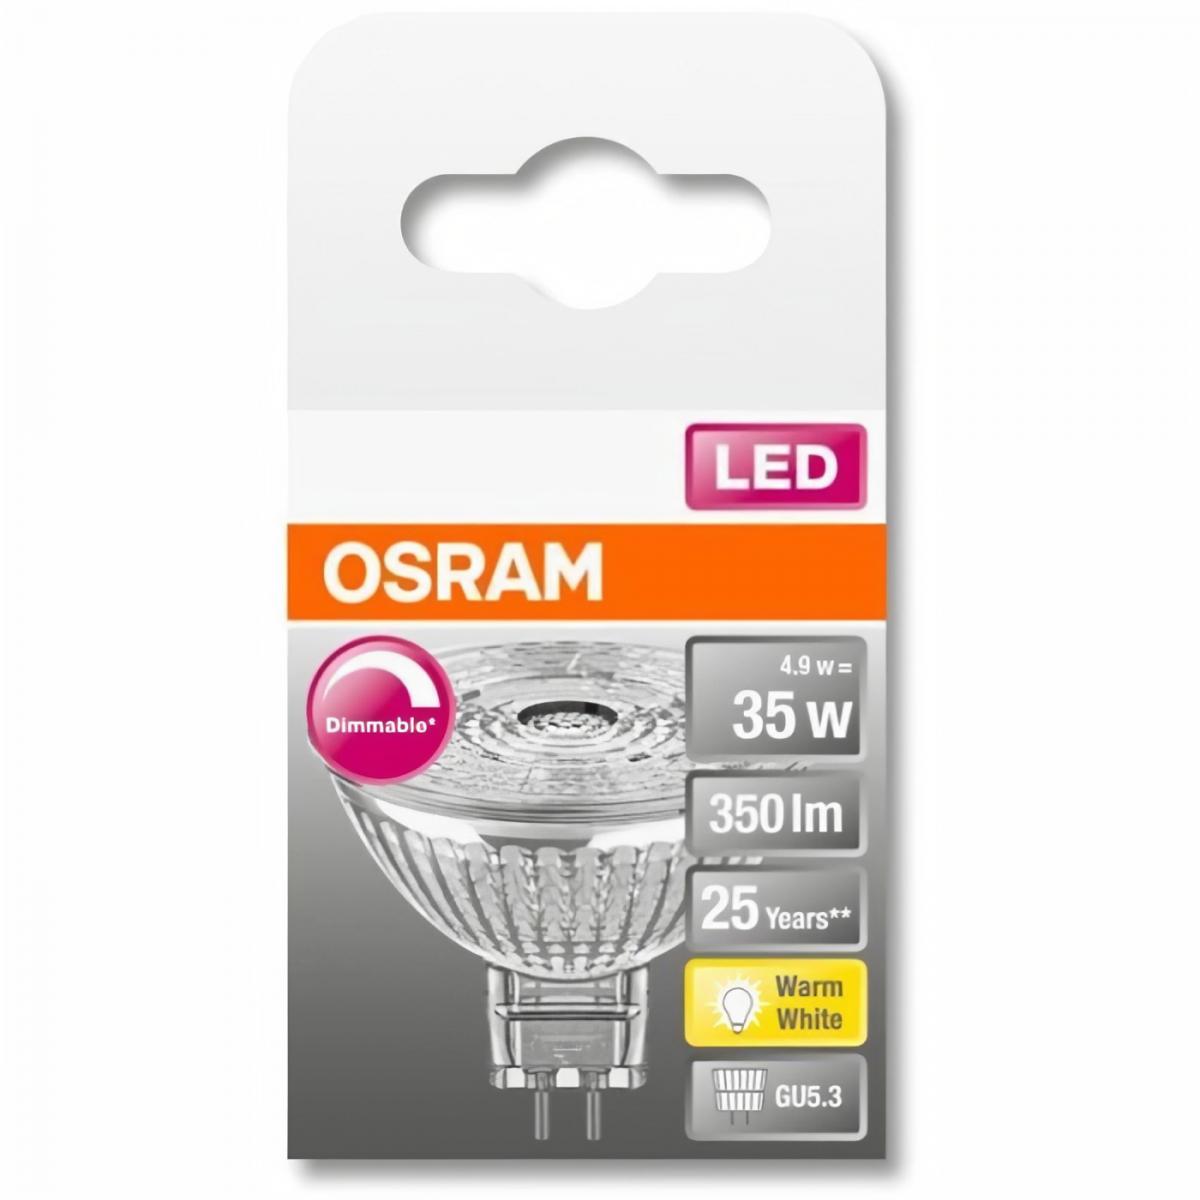 Osram - OSRAM Spot MR16 LED 36° verre variable 4,9W=35 GU5.3 chaud - Ampoules LED